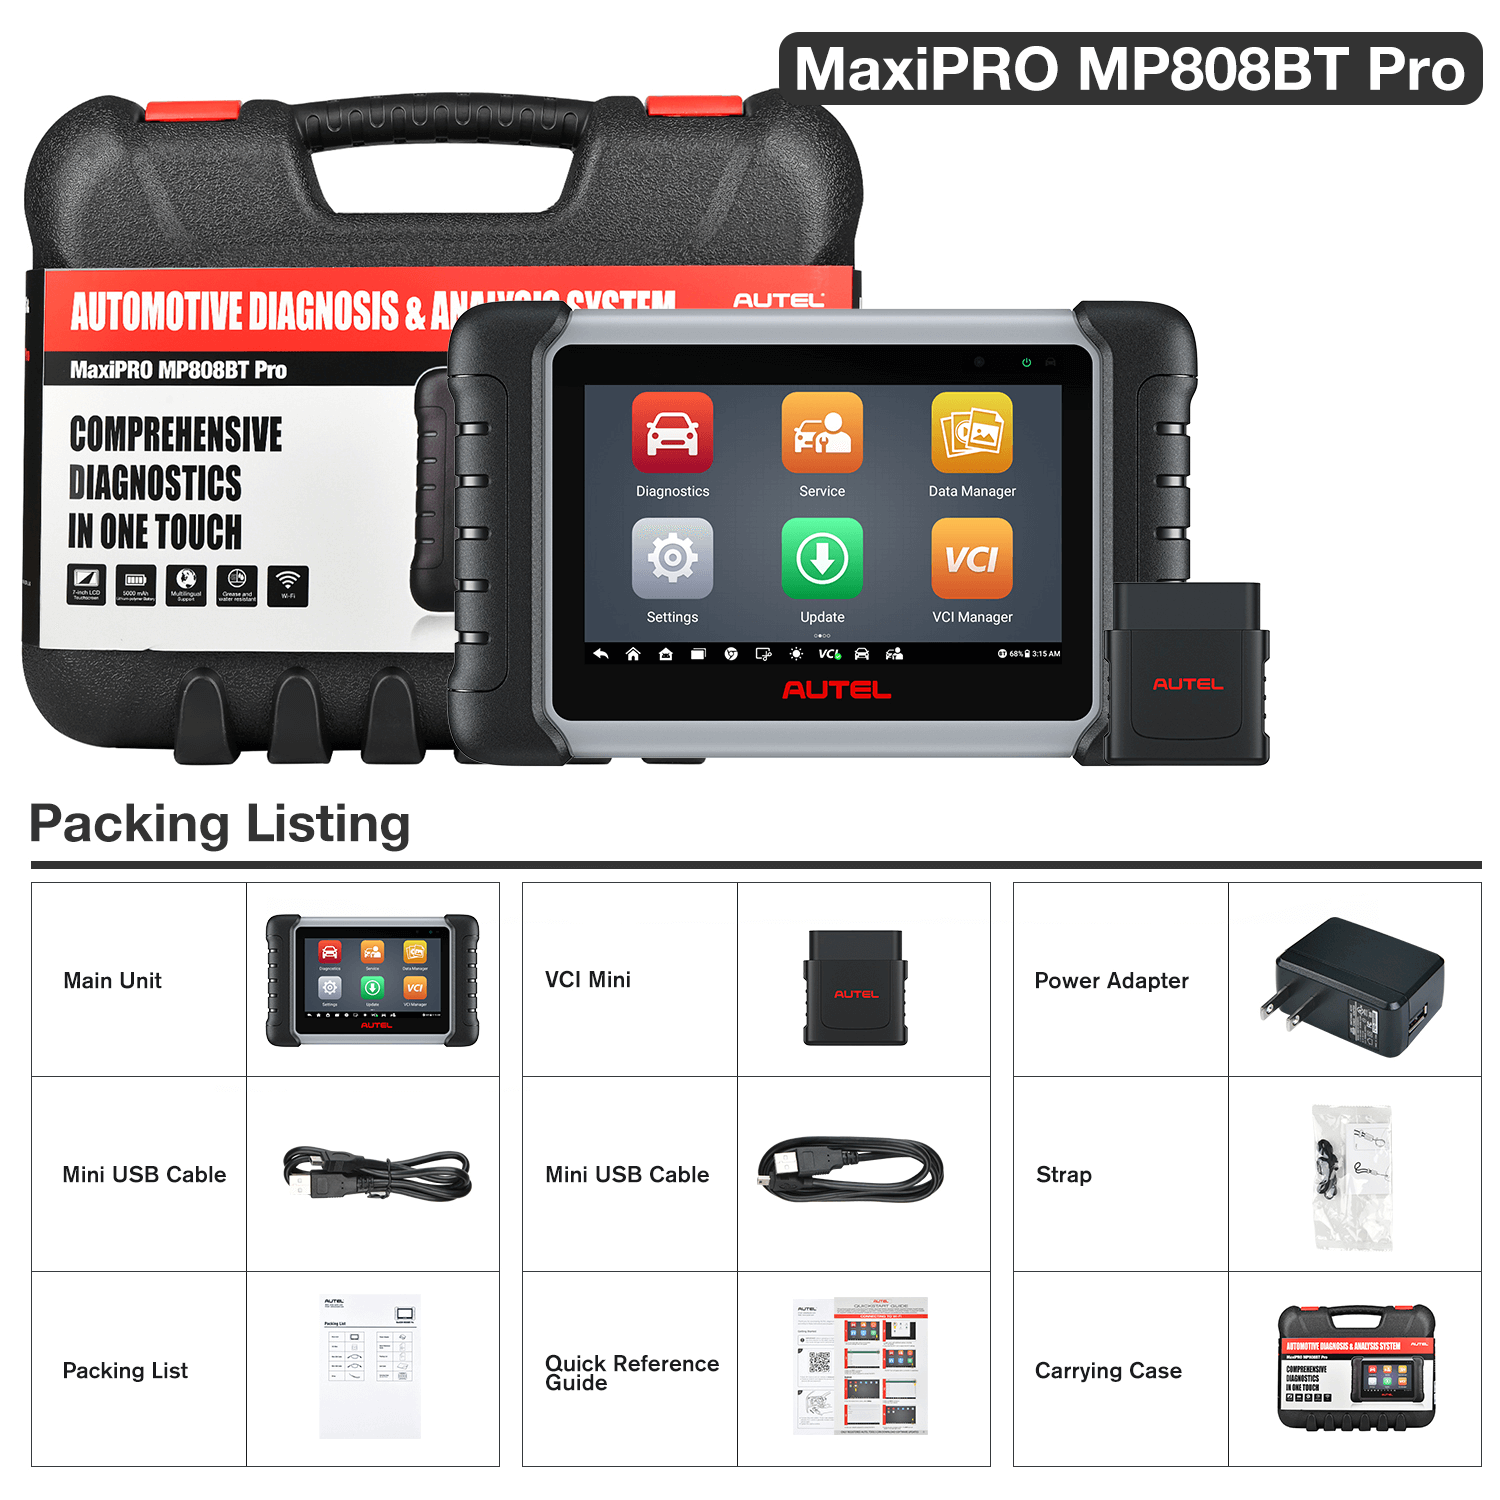 autel maxipro mp808bt pro package list